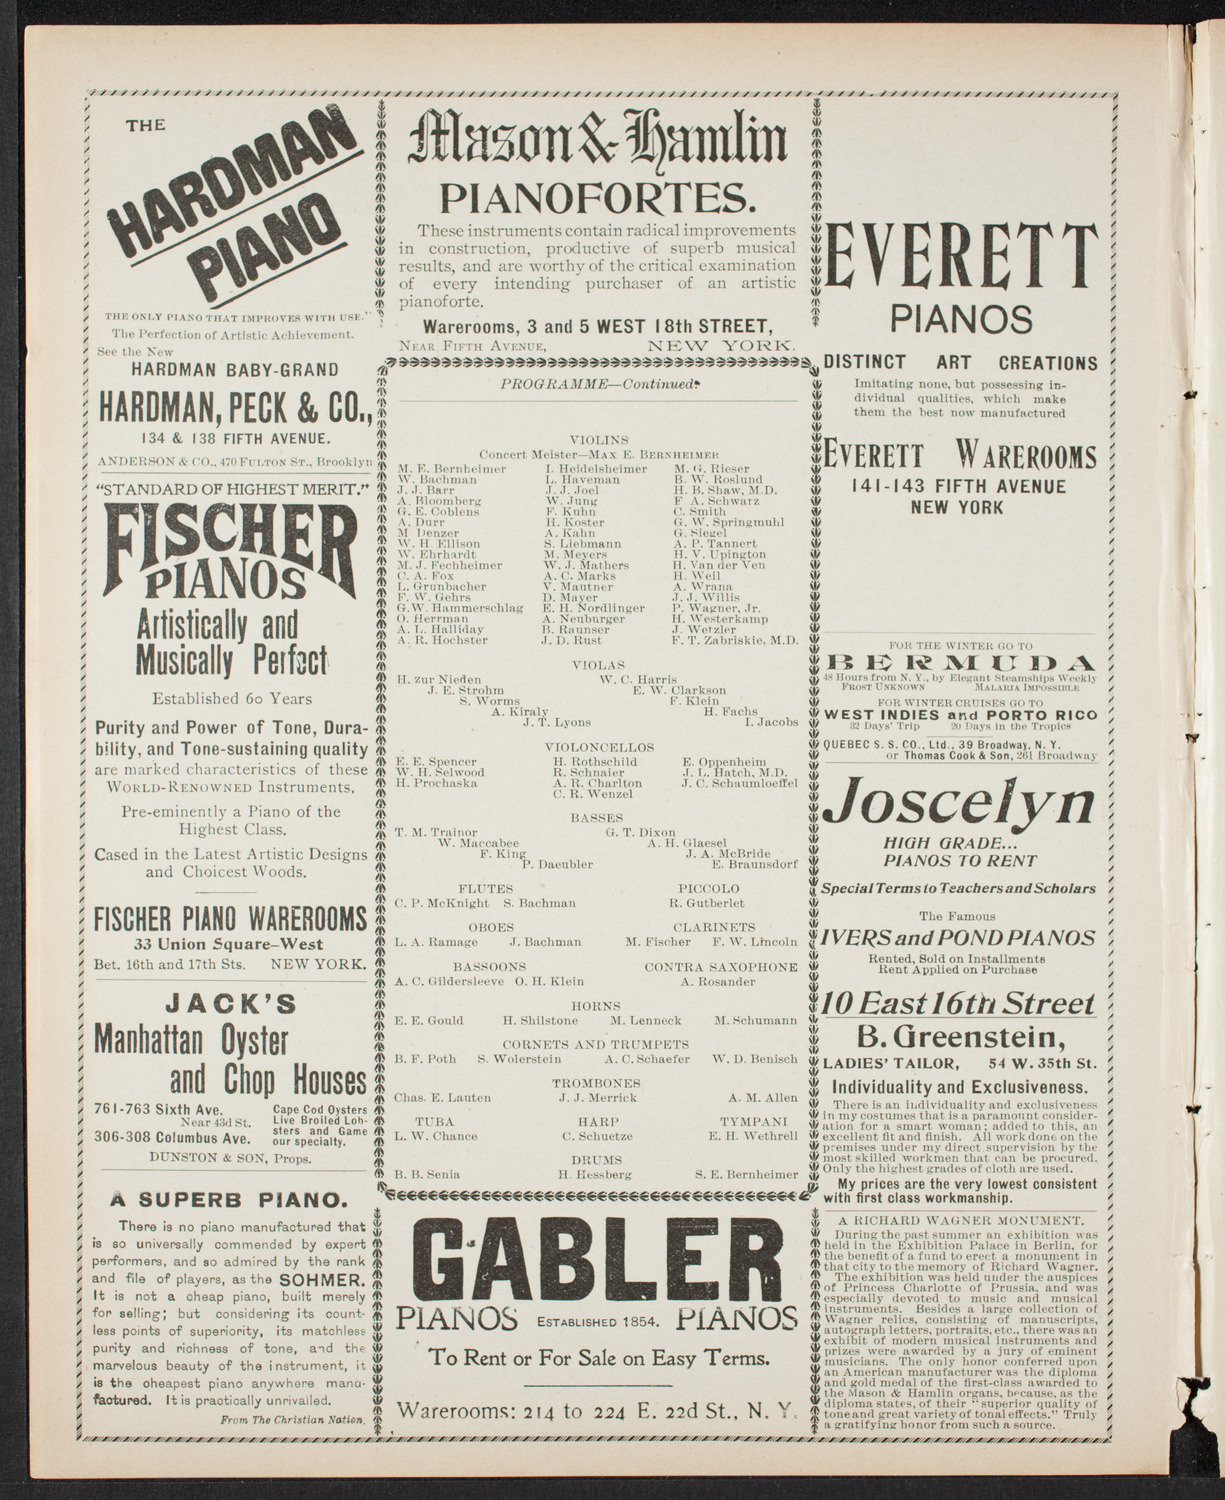 Amicitia Orchestral Club, May 4, 1900, program page 6